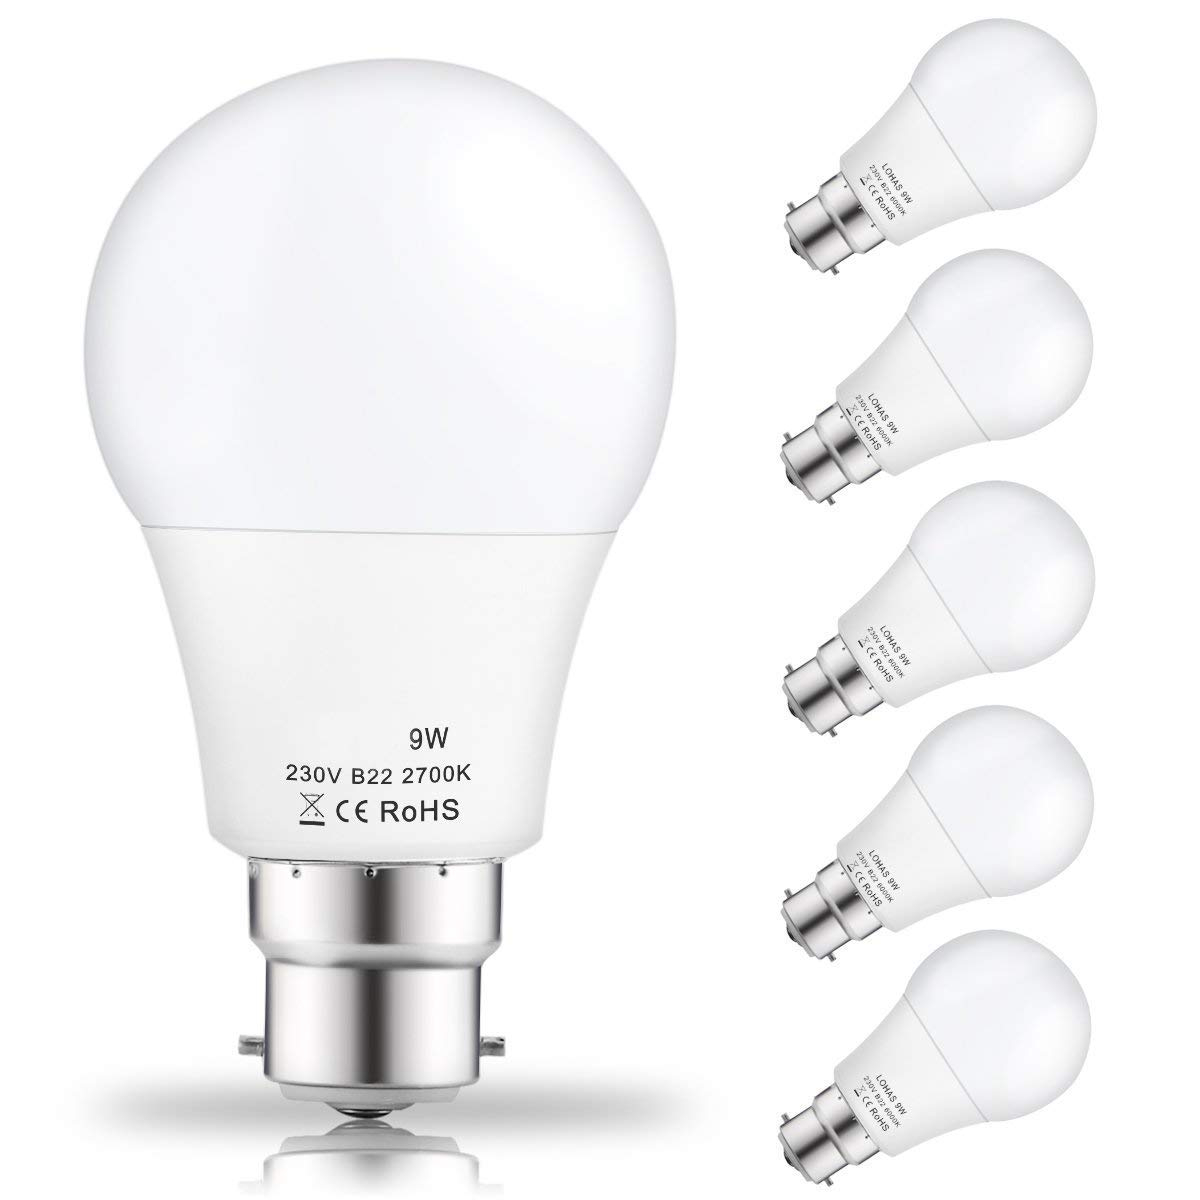 100Pcs B22 LED Lihgt Bulbs 9Watt A60 60Watt Incandescent Headlamp Equivalent Day White Non Dimmable Bayonet Lights